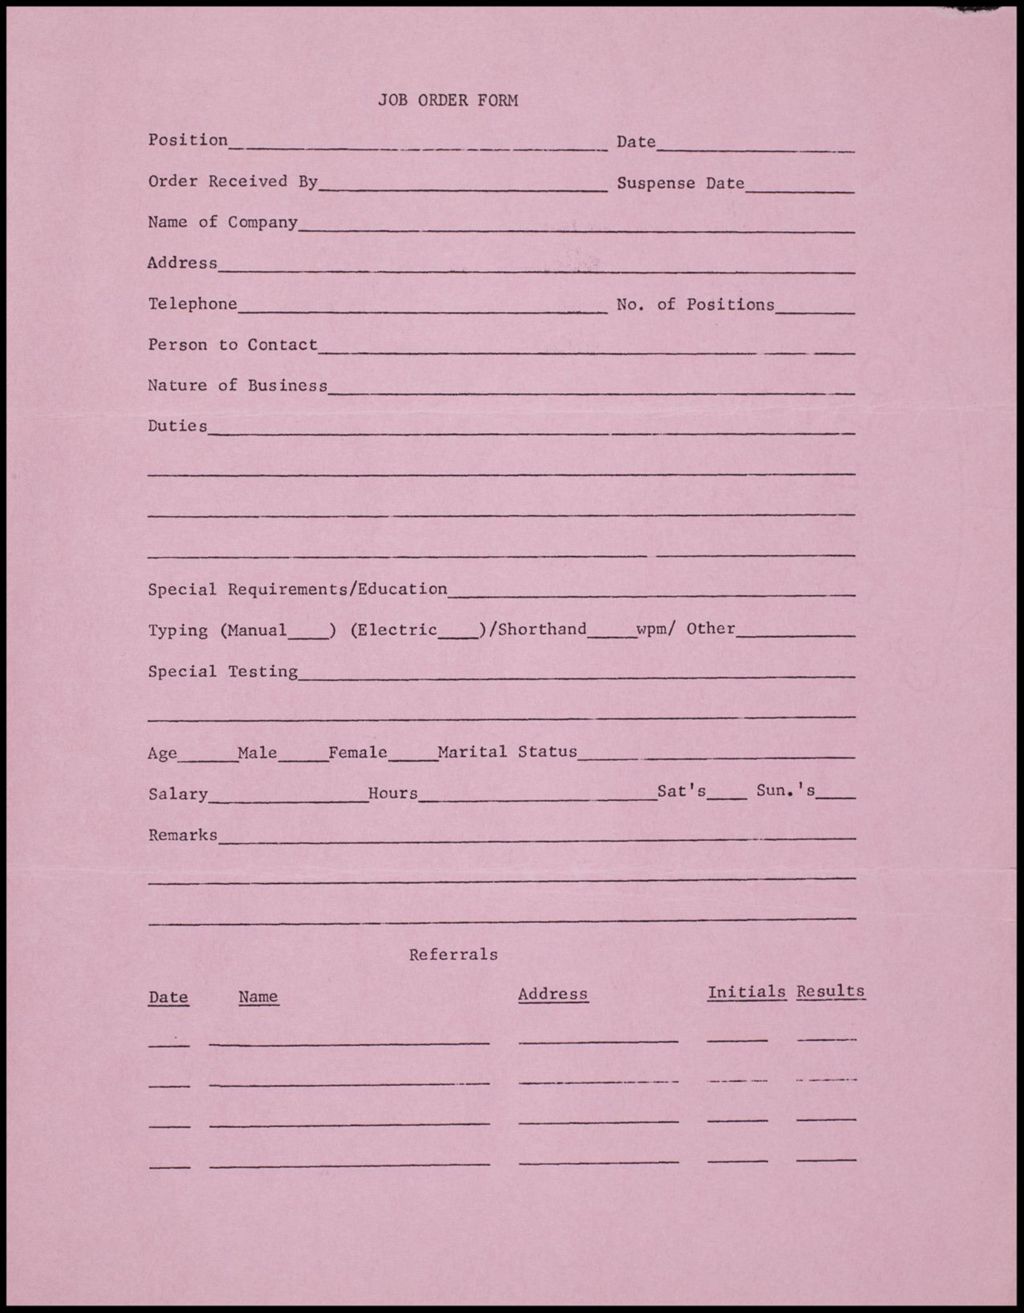 Job Order Forms, 1967 (Folder II-78)